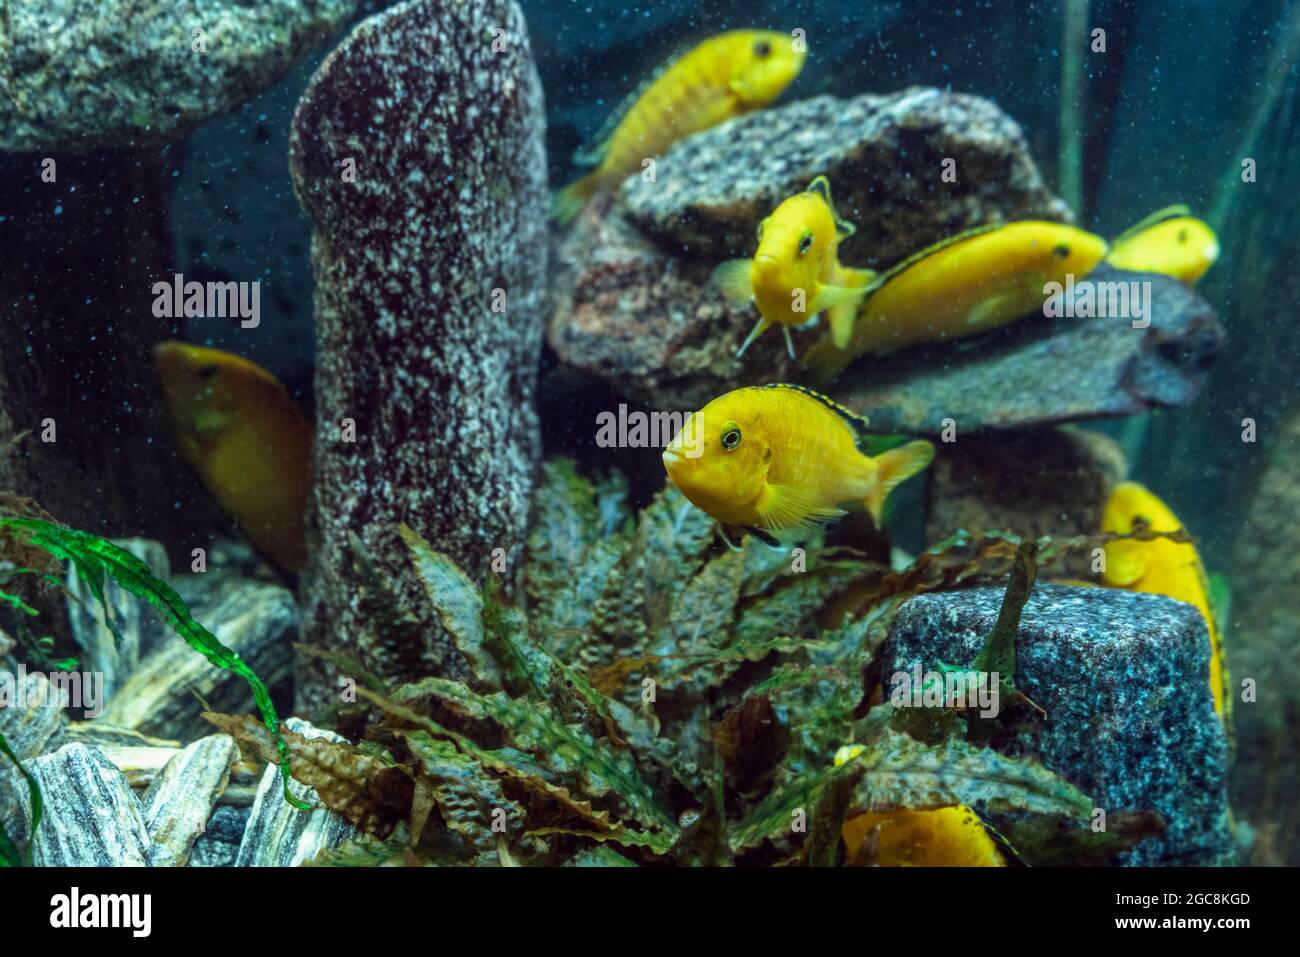 school of Labidochromis caeruleus or electric yellow cichlid swimming between rocks Stock Photo